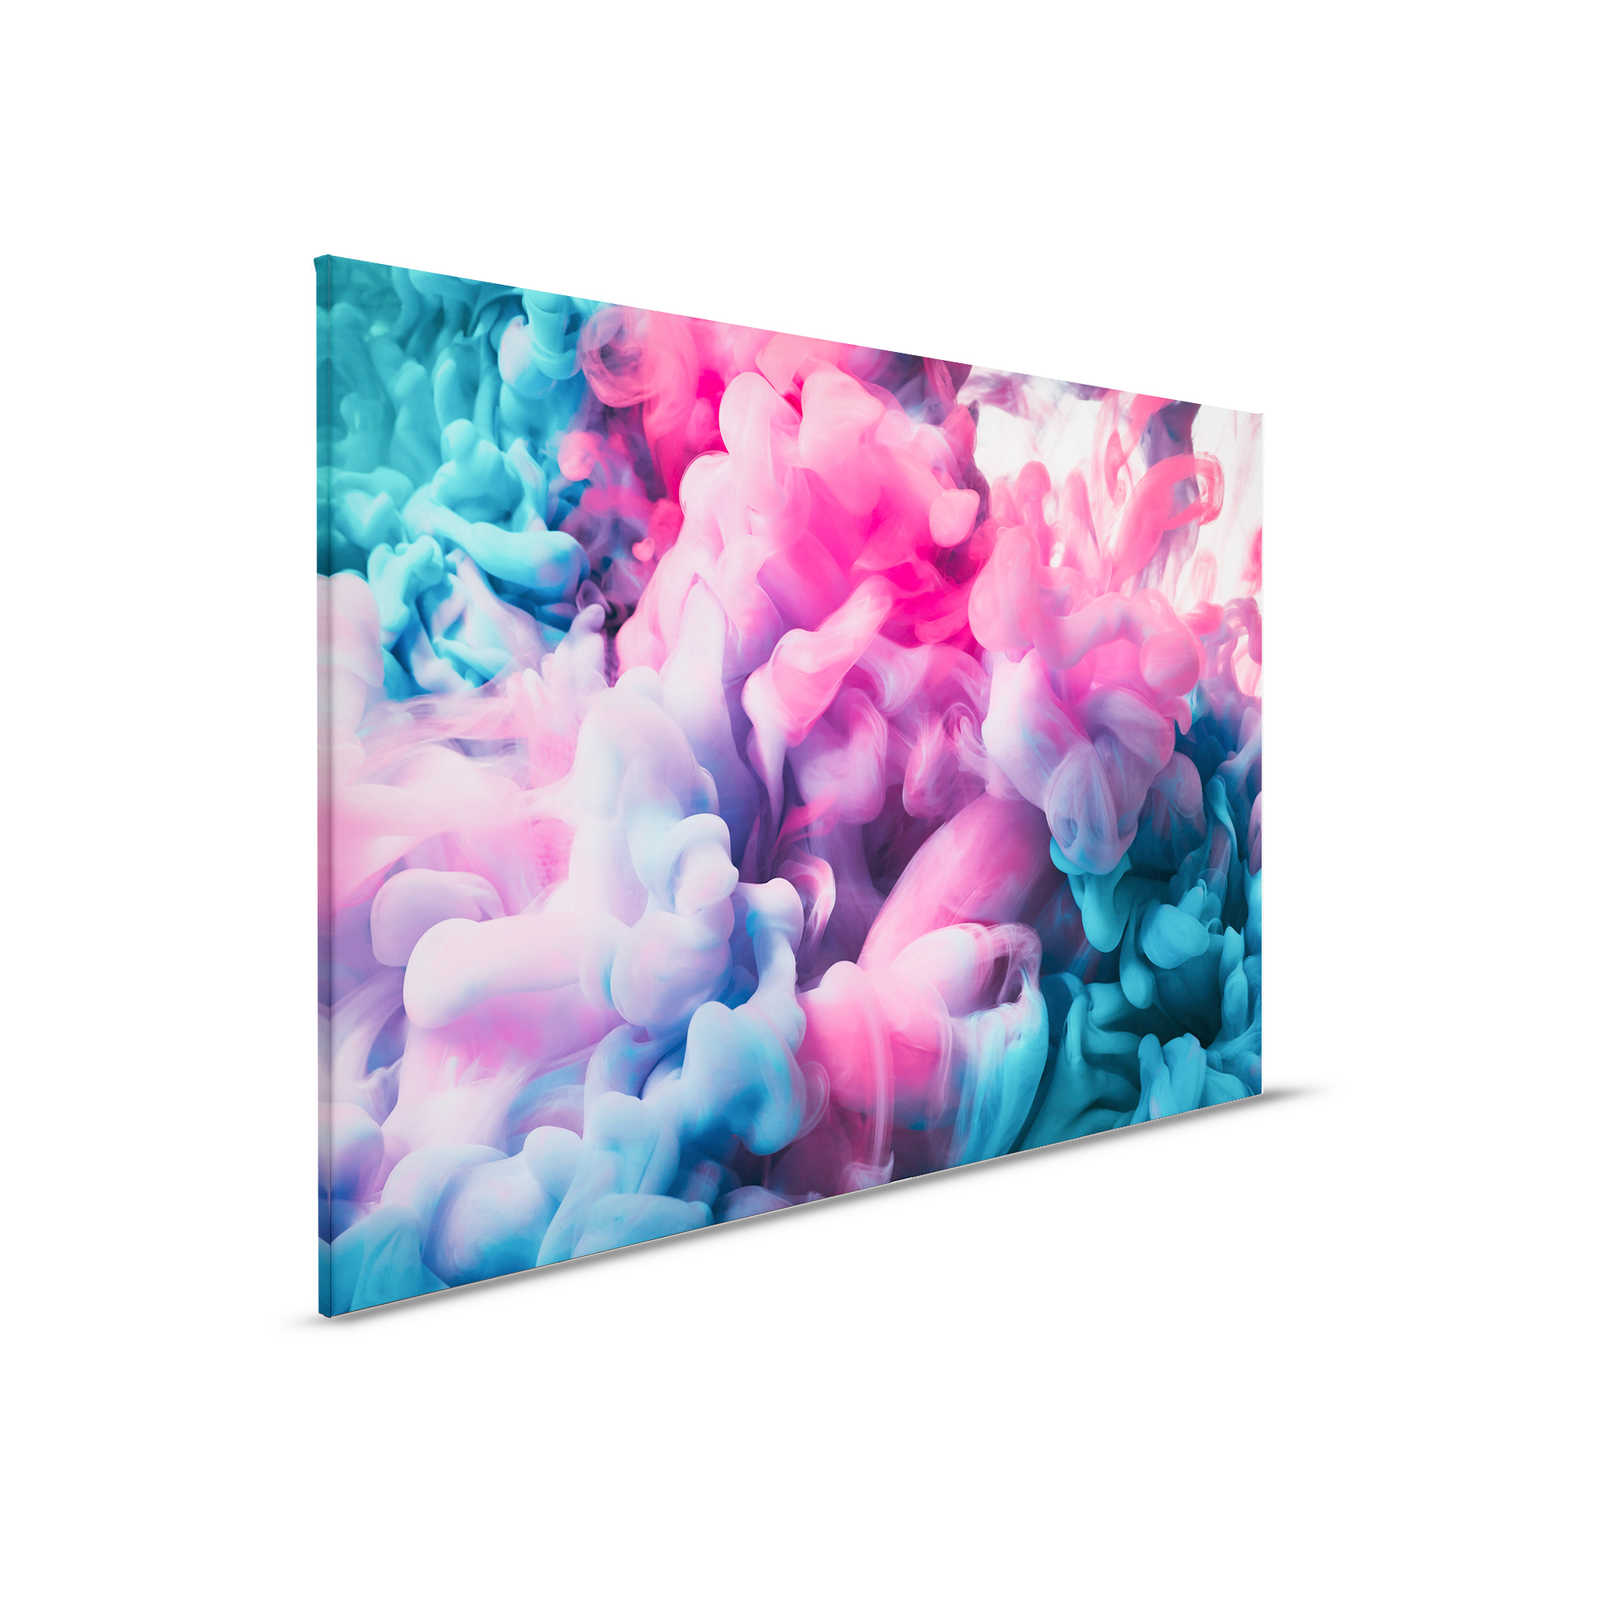         Coloured Smoke Canvas |Pink, Blue, White - 0.90 m x 0.60 m
    